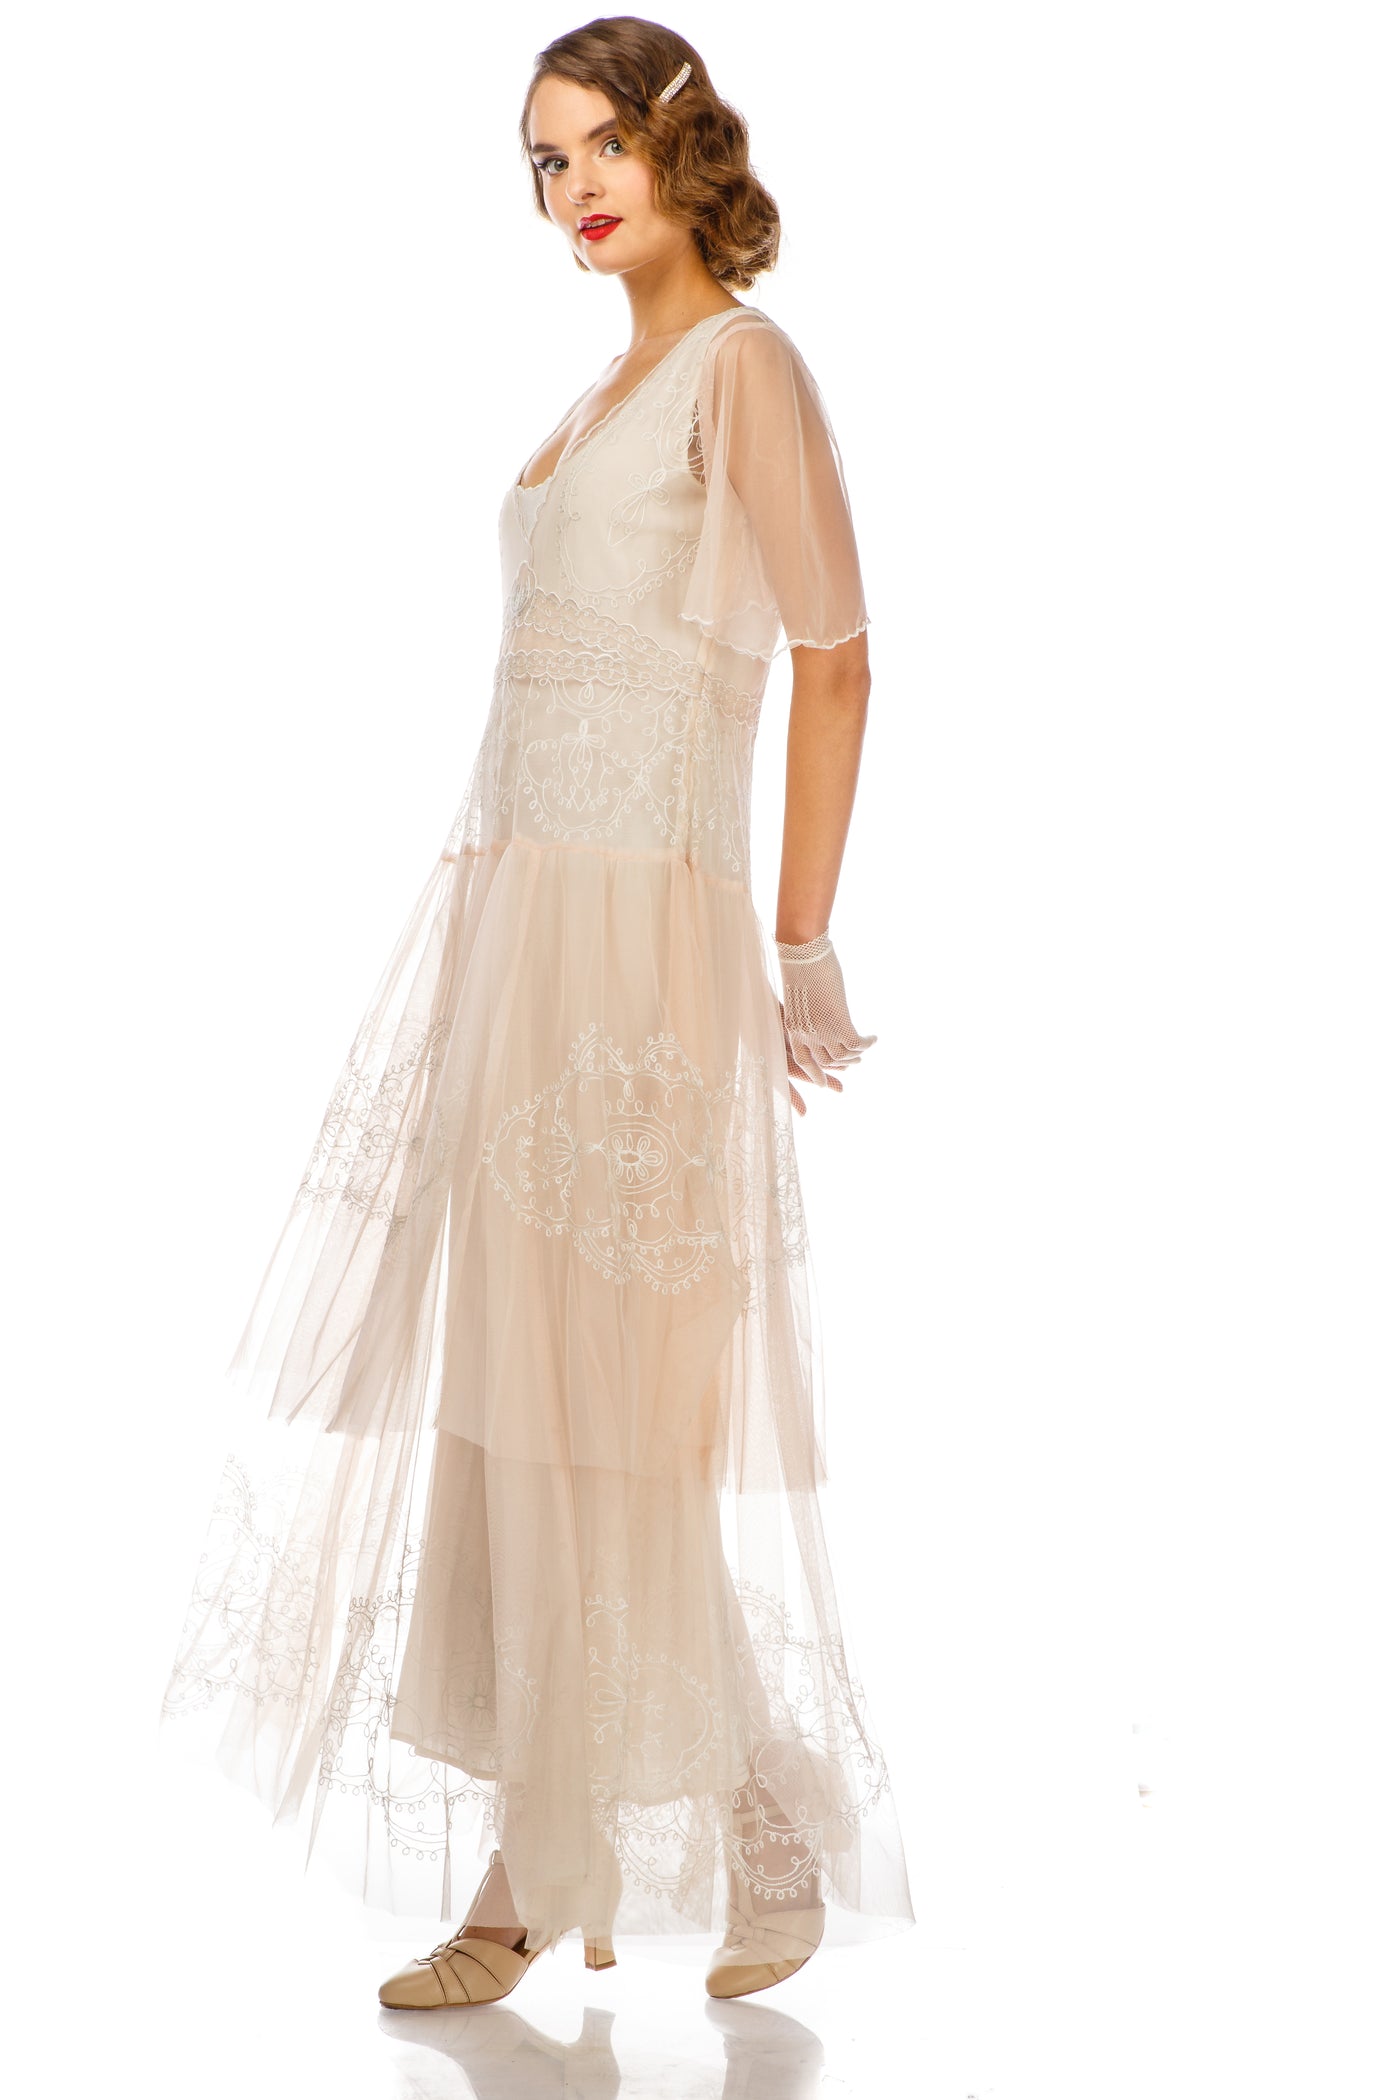 Scarlett 1920s Style Wedding Dress in Peach Ivory by Nataya